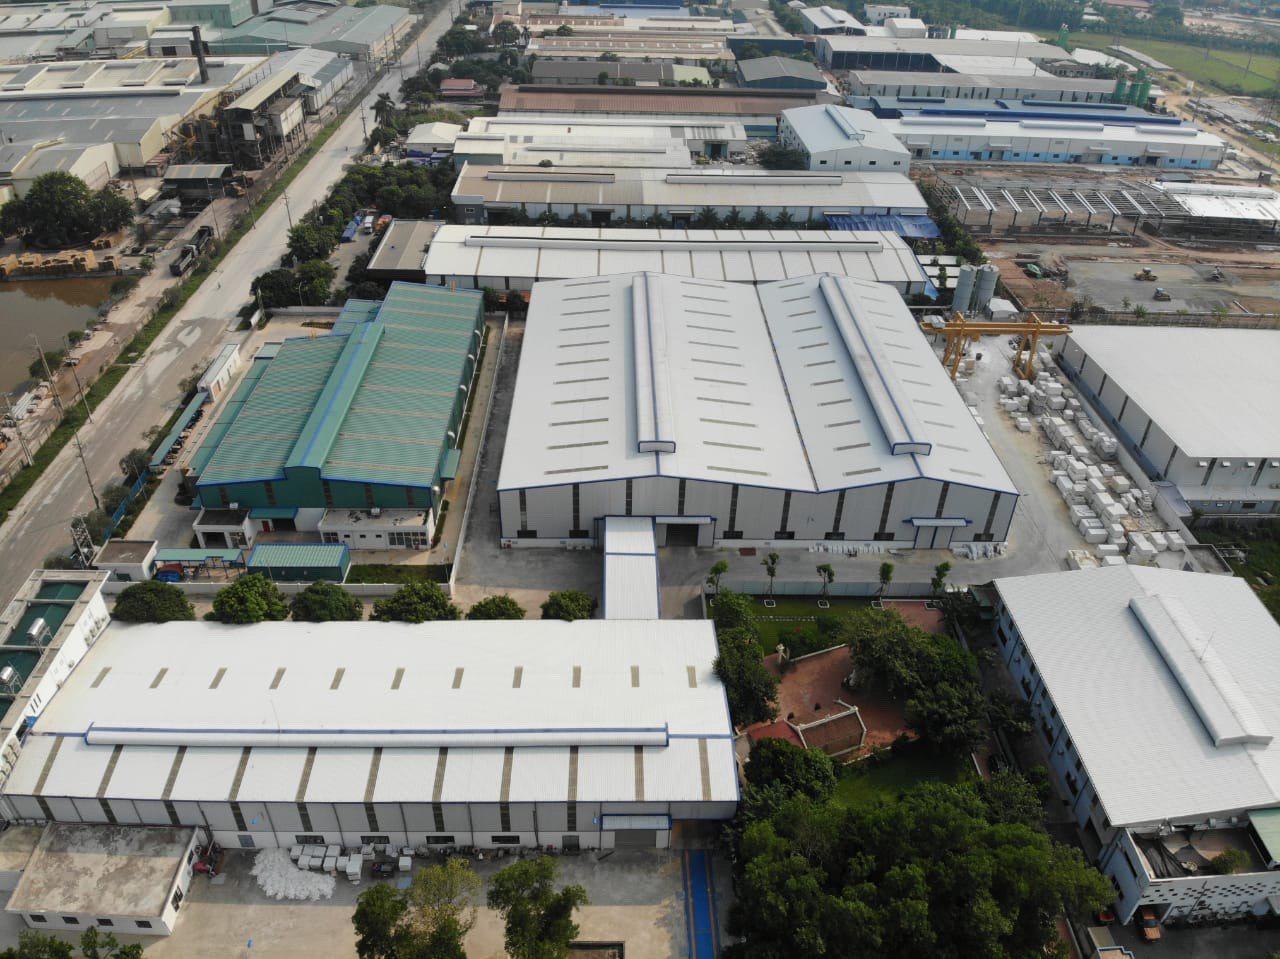 M&A - Factory for sales - Binh Xuyen IP - Vinh Phuc Province - 100B vnd